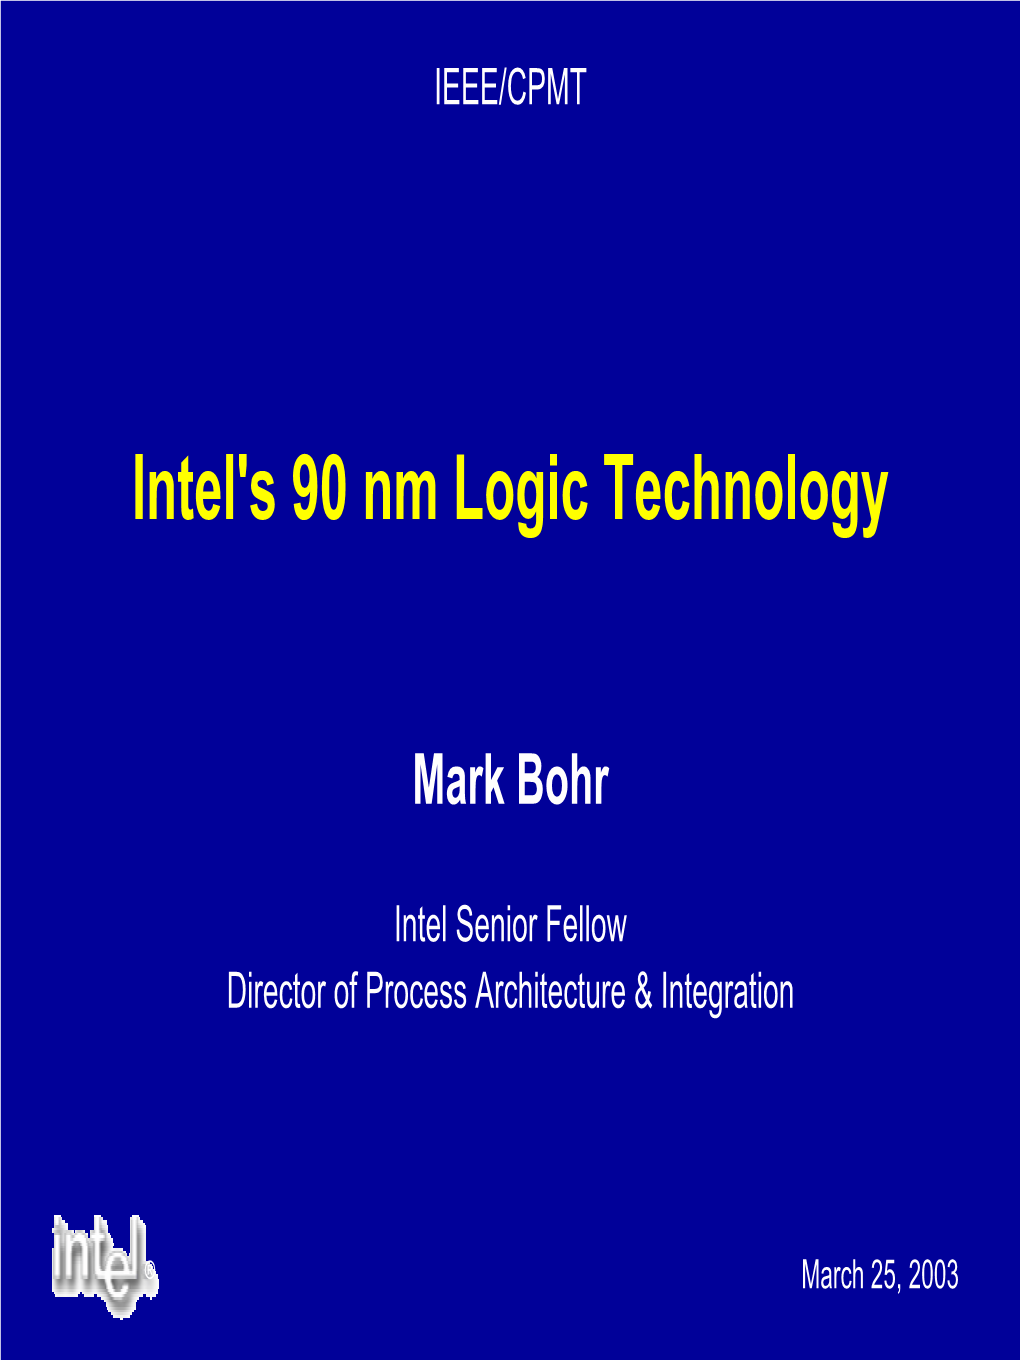 Intel's 90 Nm Logic Technology